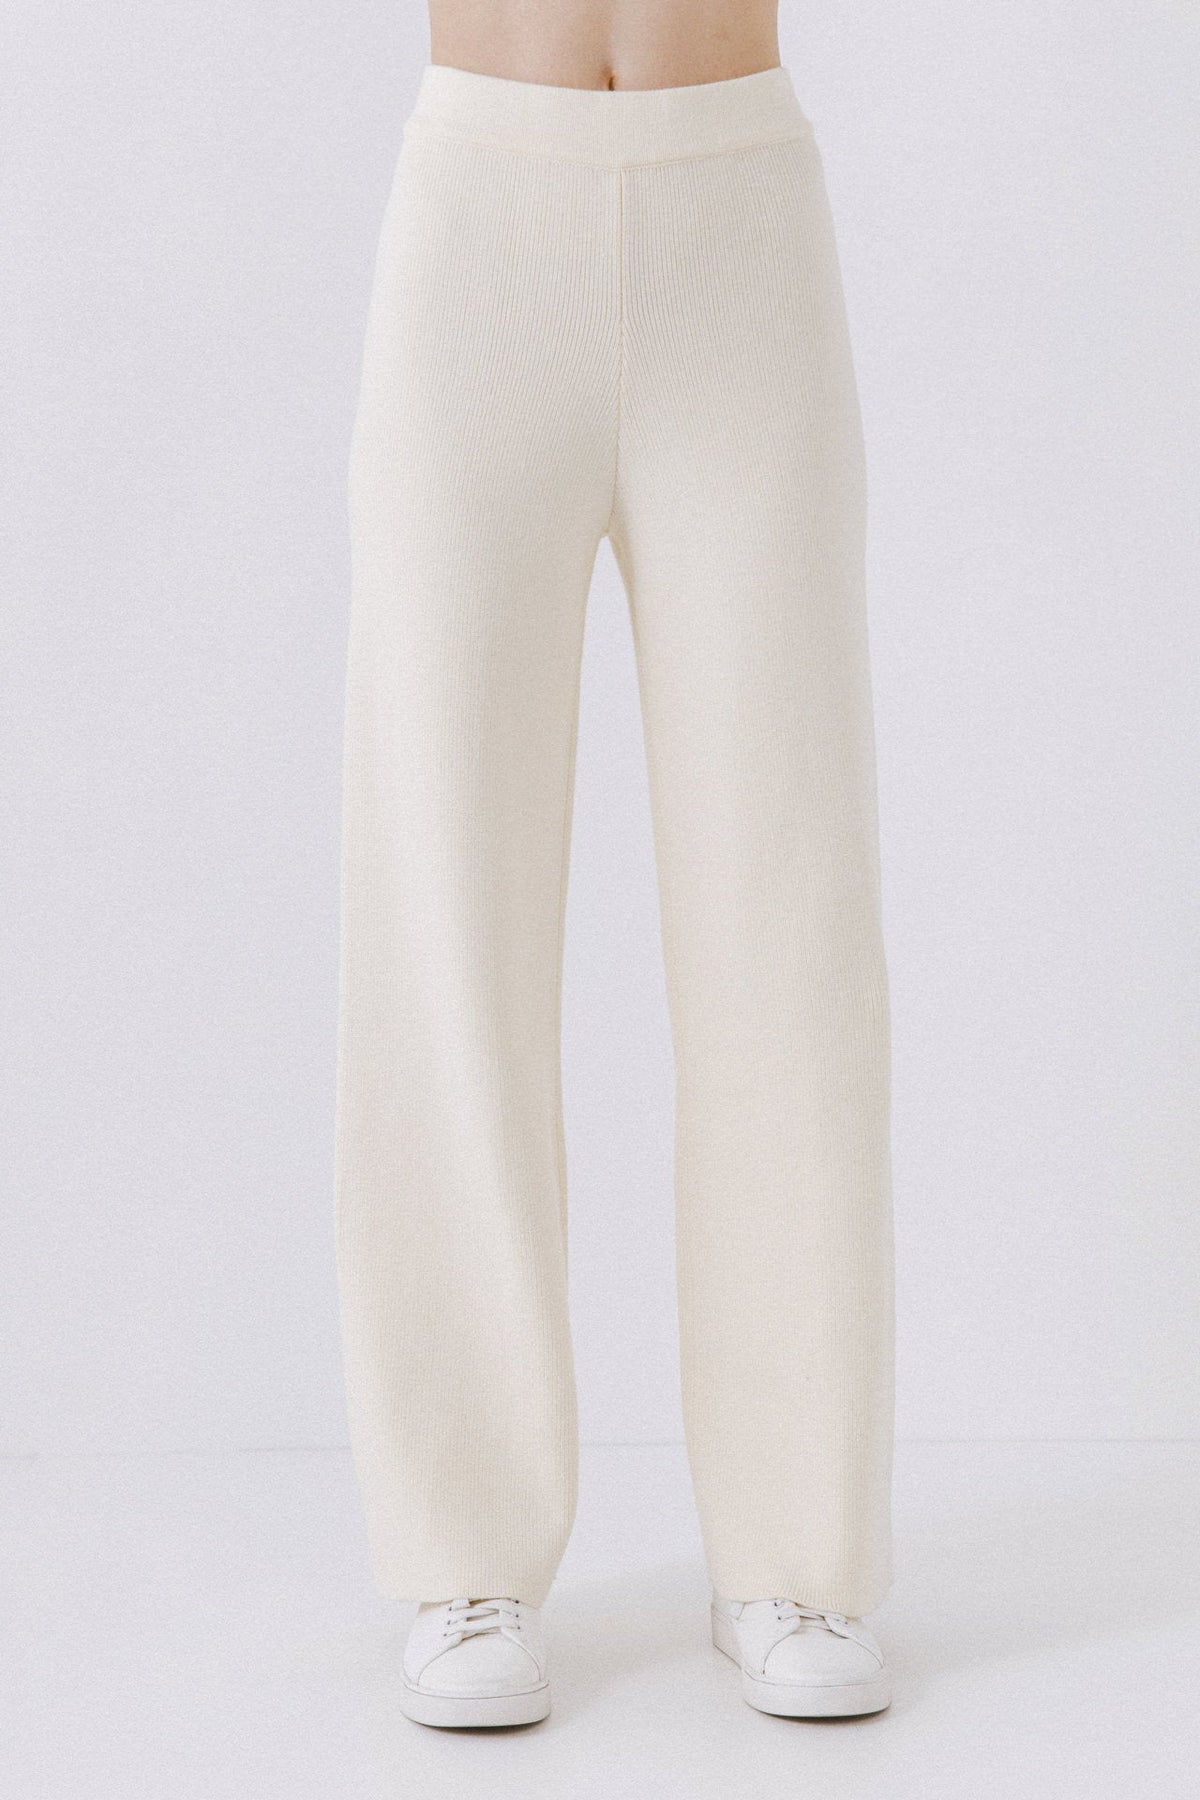 Buy YSJ Women's Knitted Wide Leg Long Pants Winter Warm Sweater Trousers  (S, Gray) at